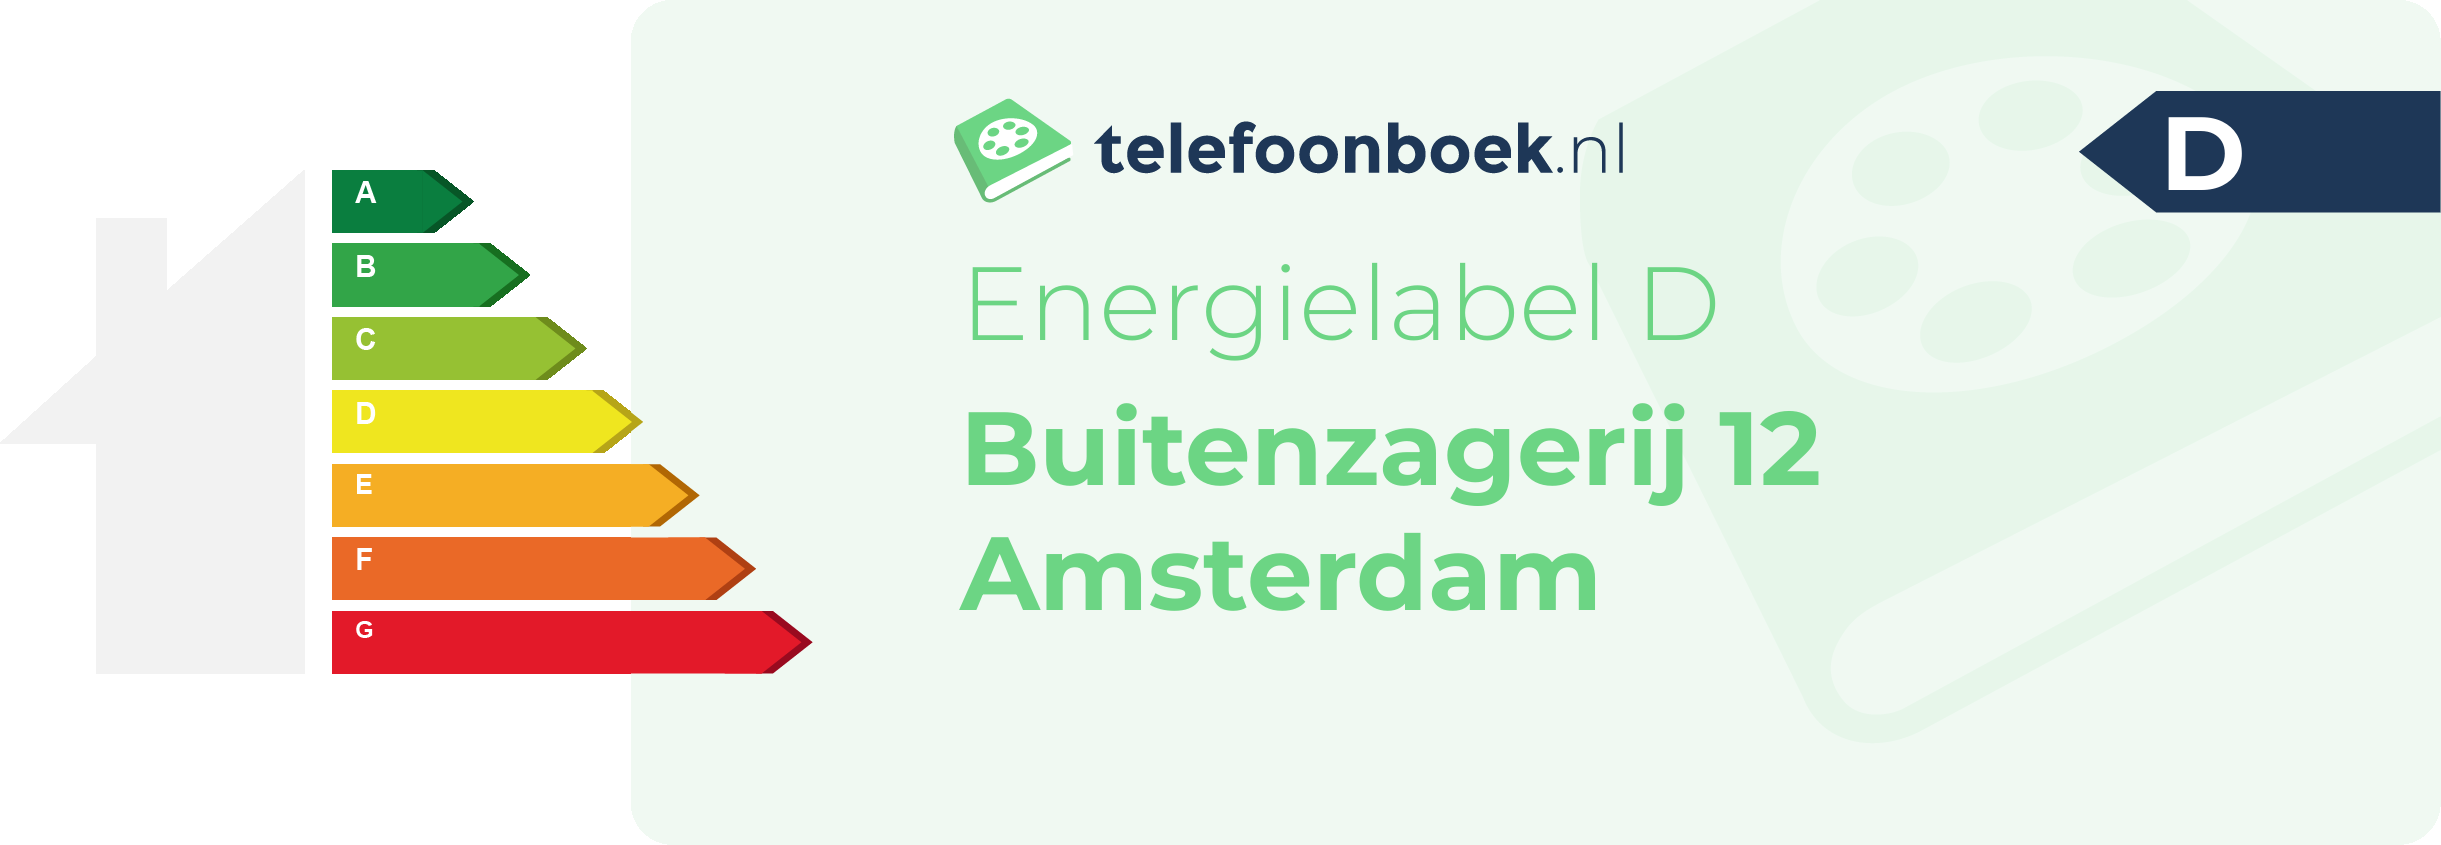 Energielabel Buitenzagerij 12 Amsterdam